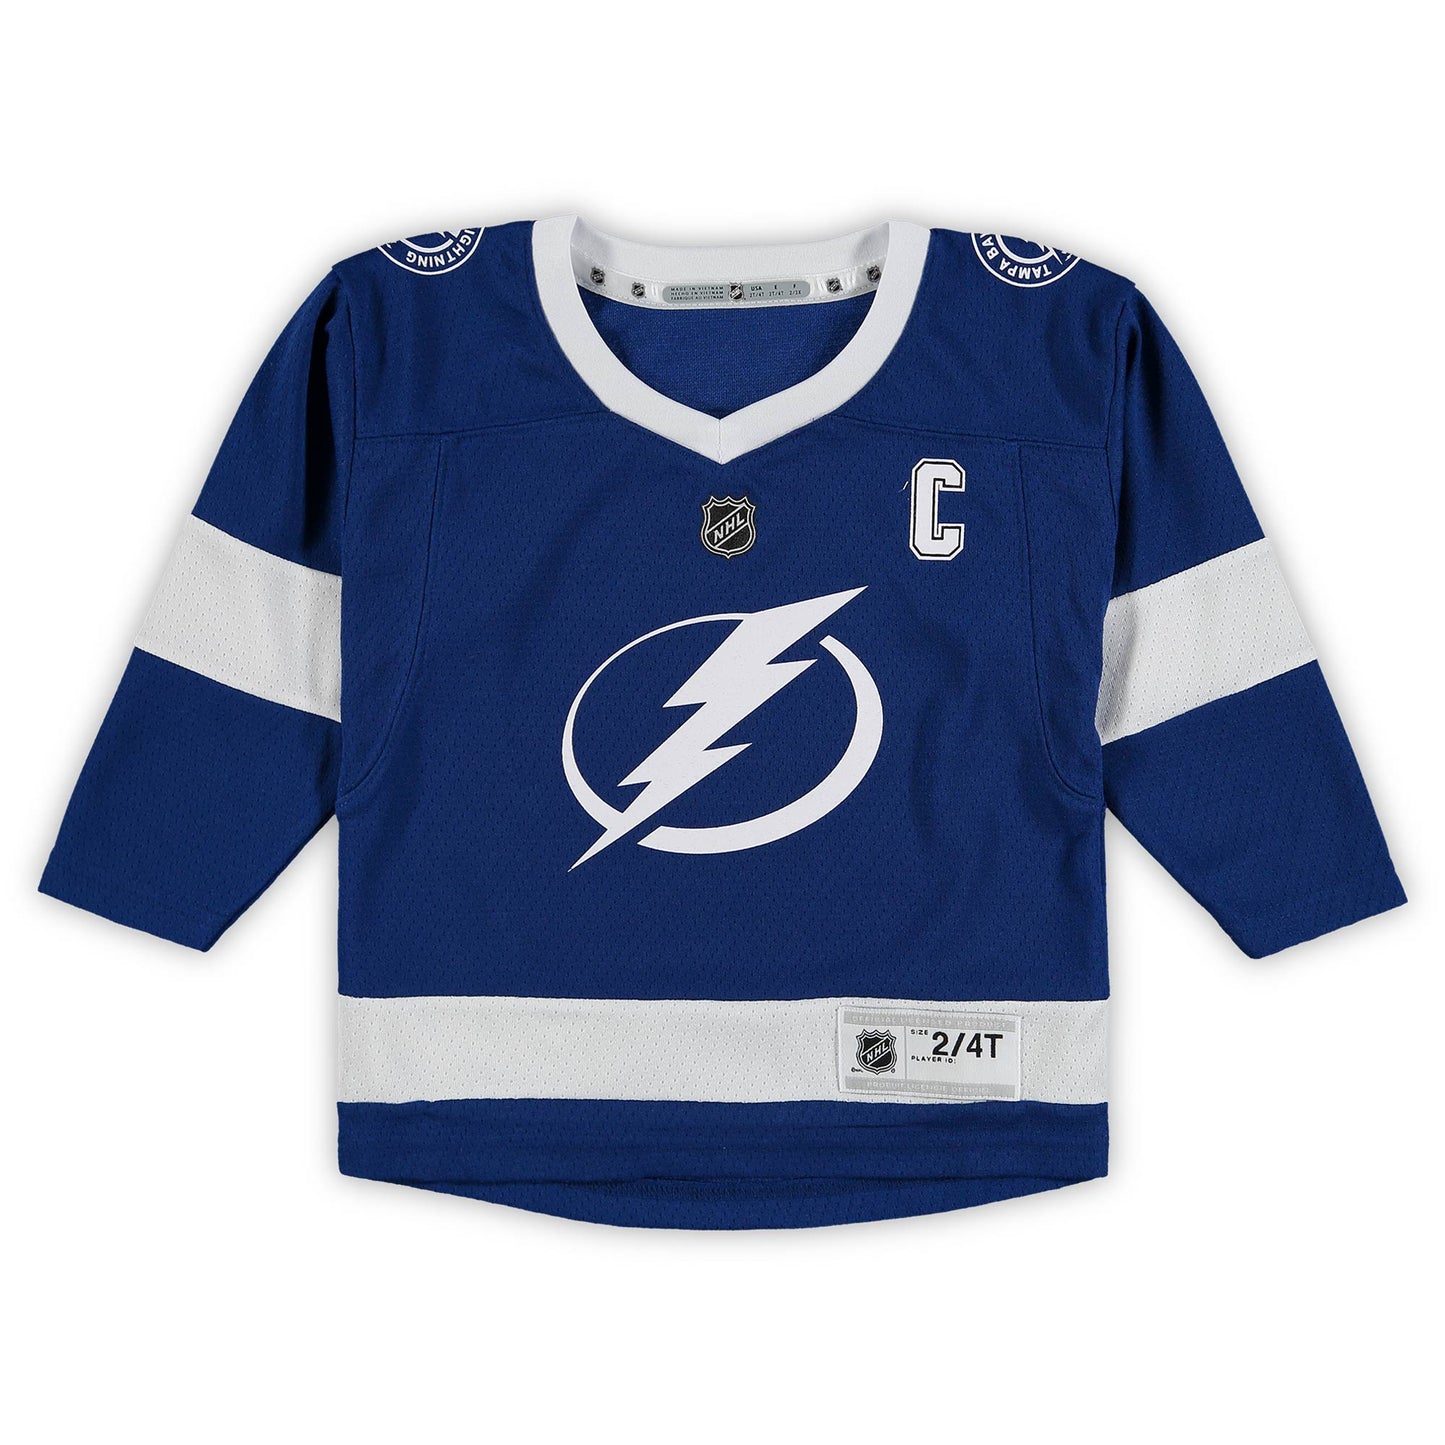 Steven Stamkos Tampa Bay Lightning Toddler Replica Player Jersey - Blue